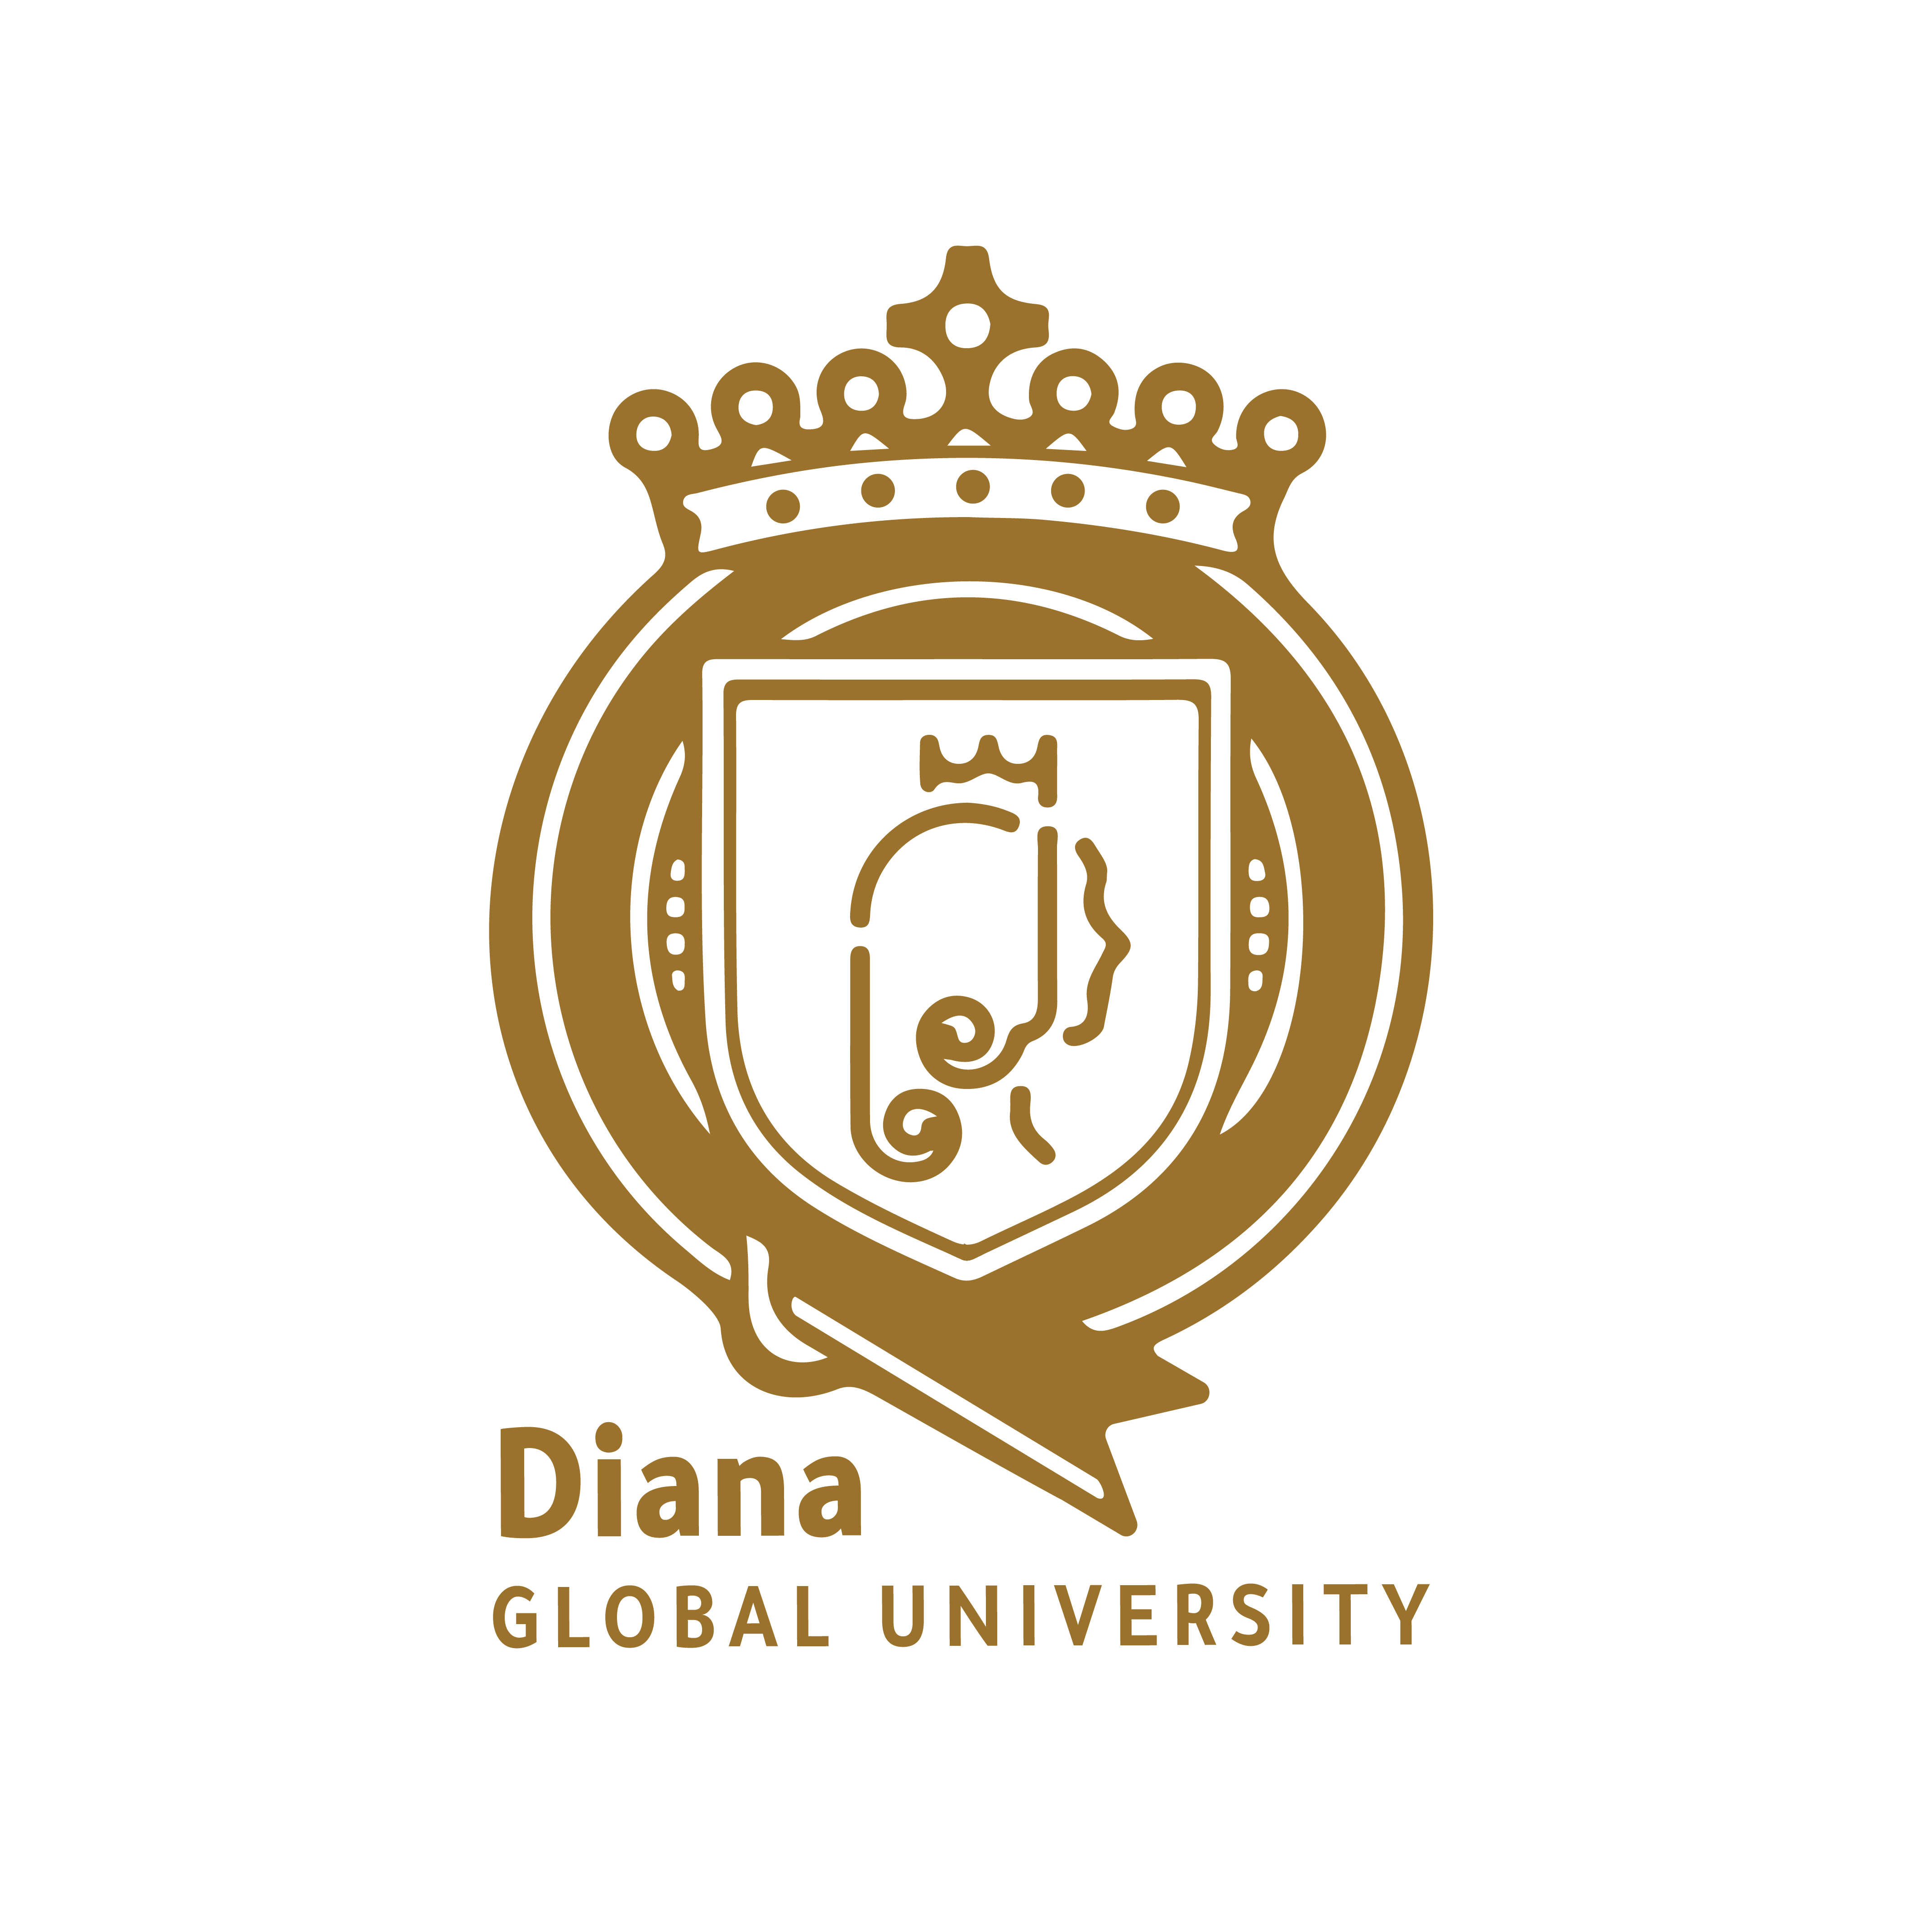 Diana Global University